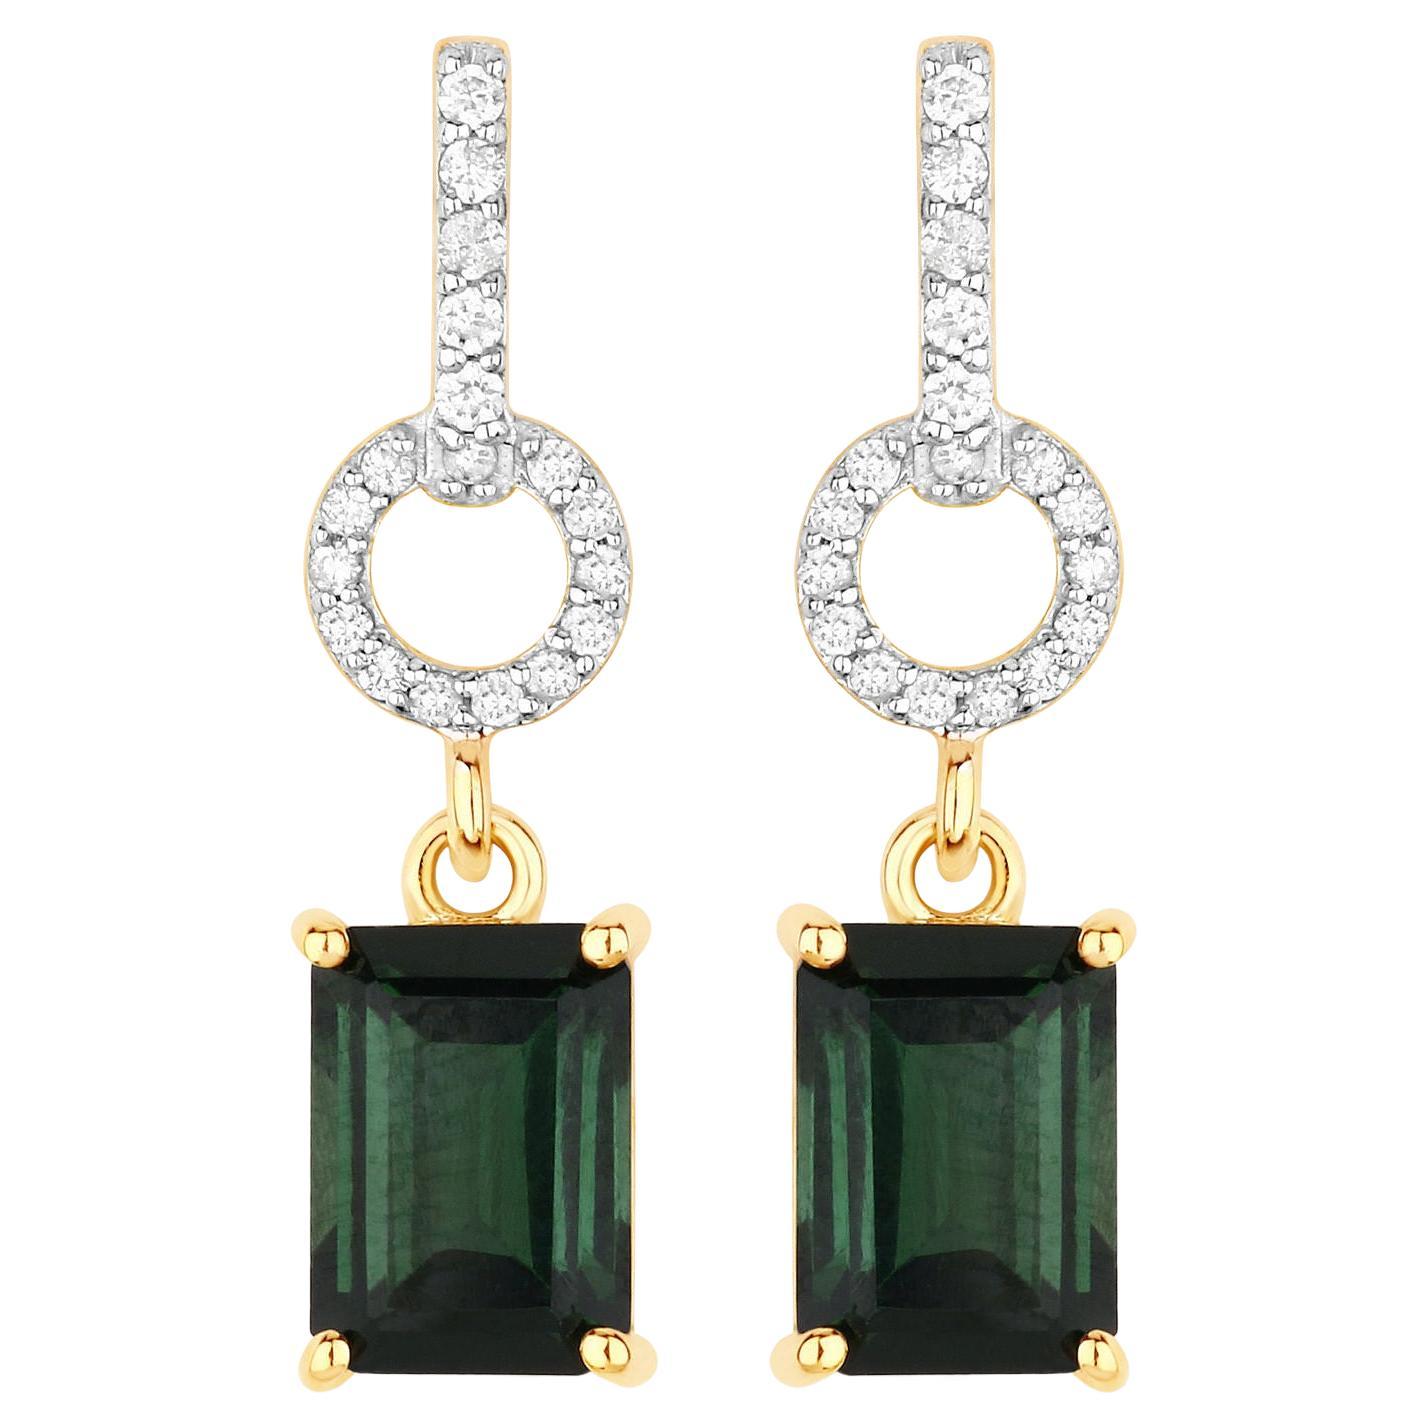 Natural Green Tourmaline and Diamond Dangle Earrings 2.30 Carats 14k Yellow Gold